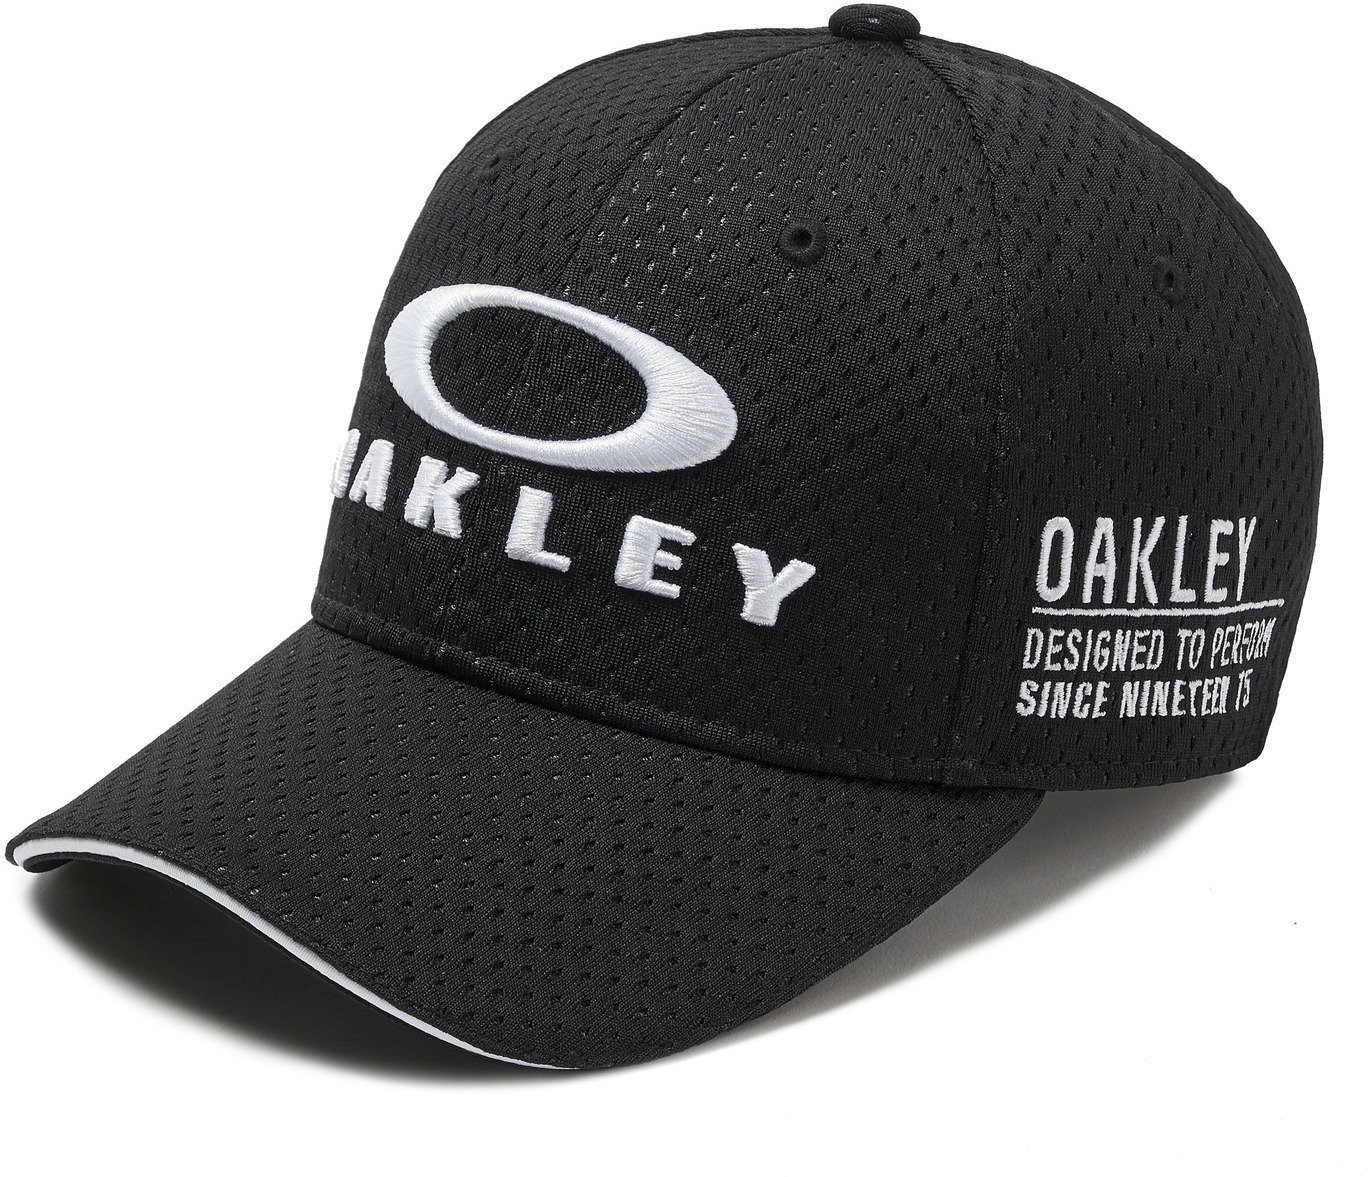 Каскет Oakley Bg Fixed Blackout